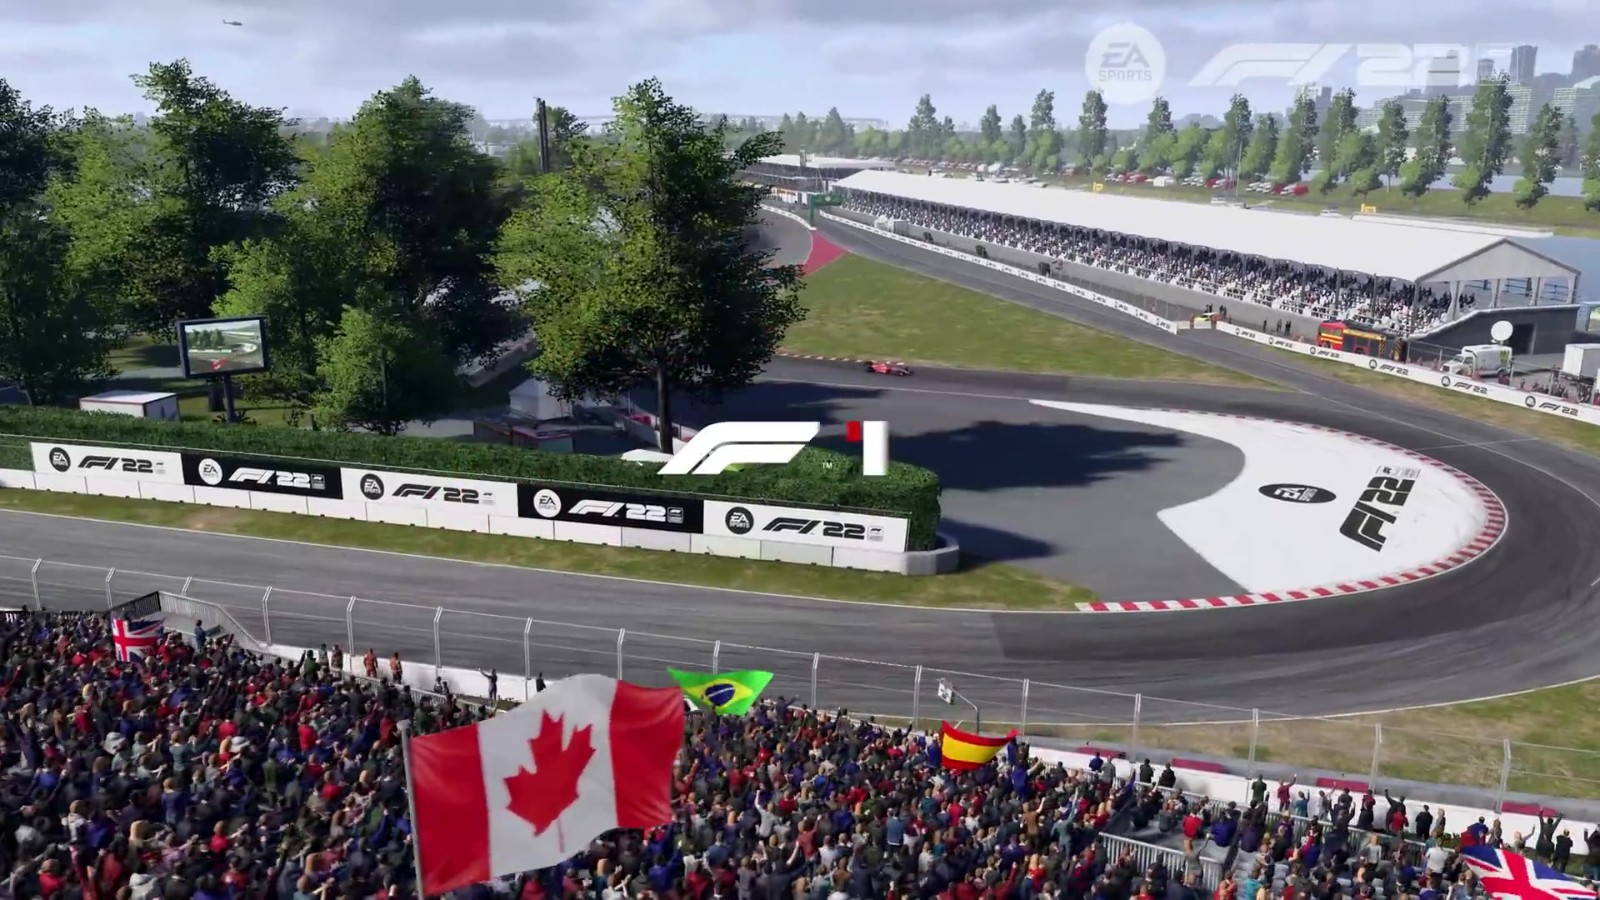 《F1 22》新預告片展示了PC獨佔VR實機視頻